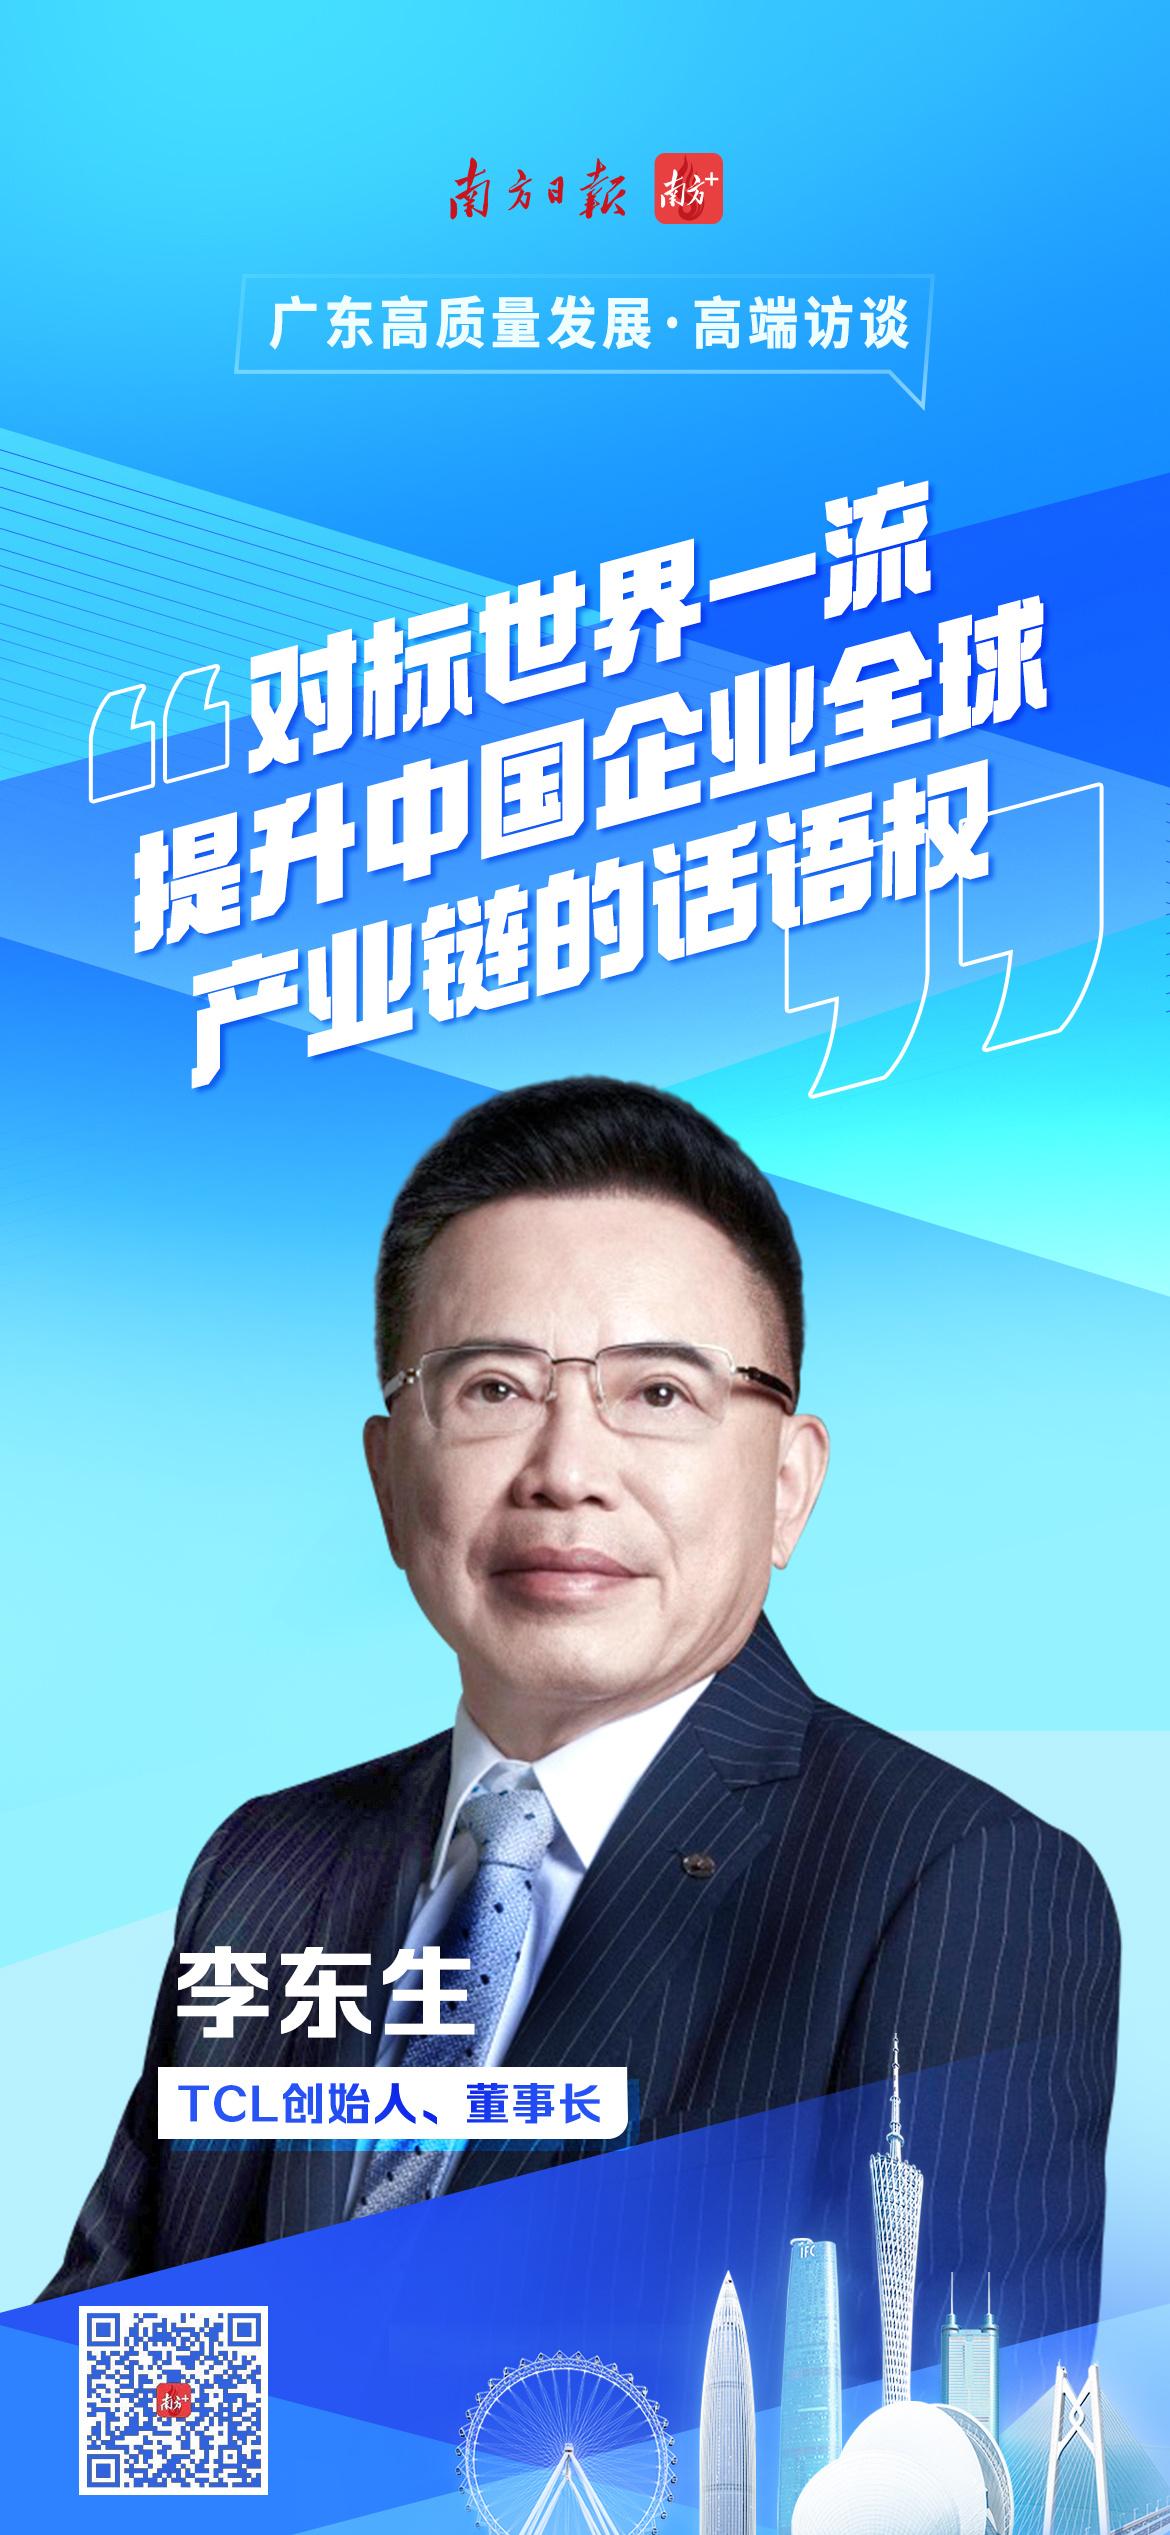 TCL李东生：对标世界一流，提升中国企业全球产业链的话语权